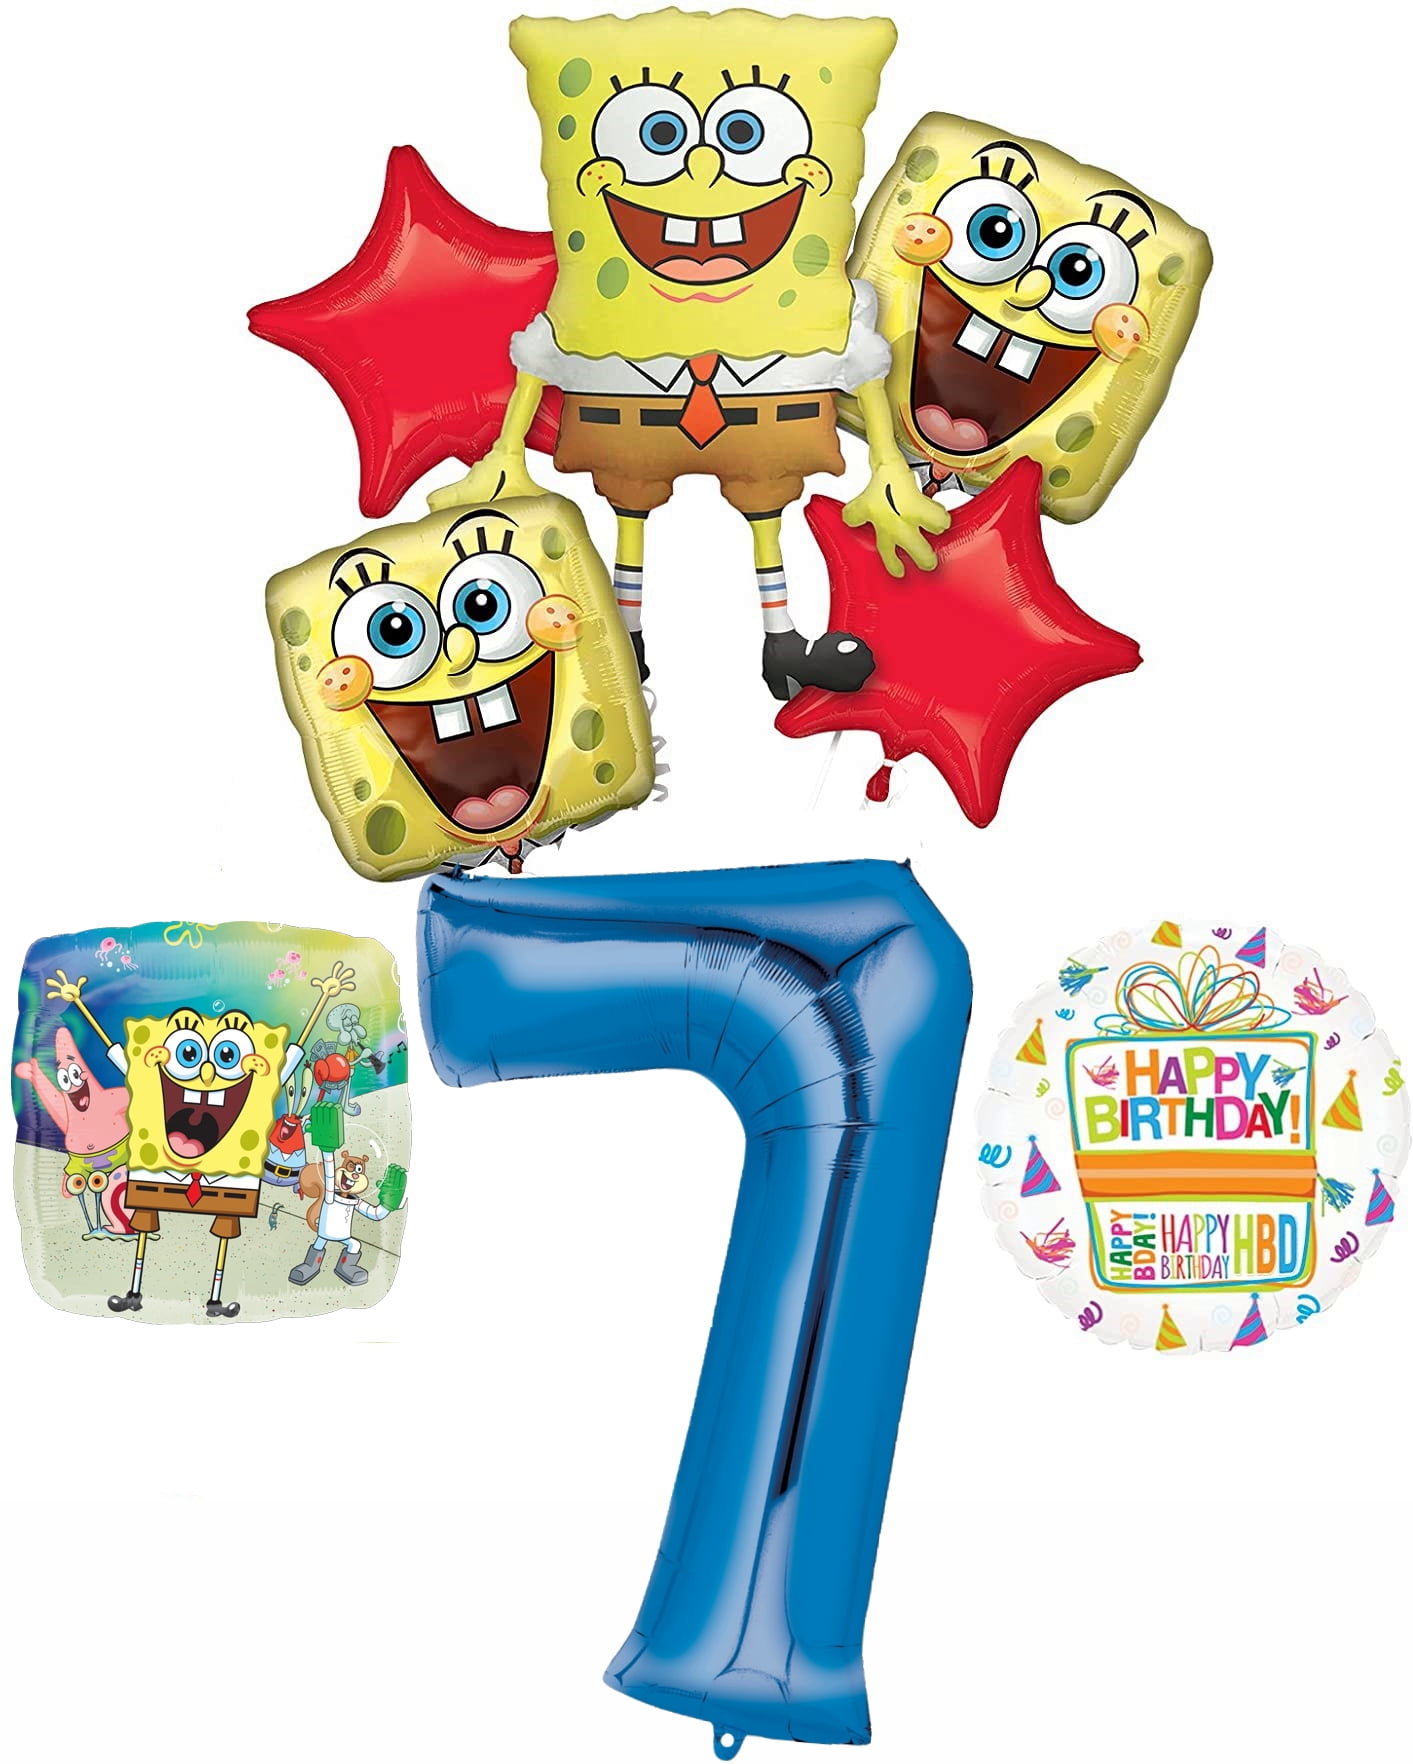 Spongebob Large Foil Balloon Supershape Birthday Decorations 